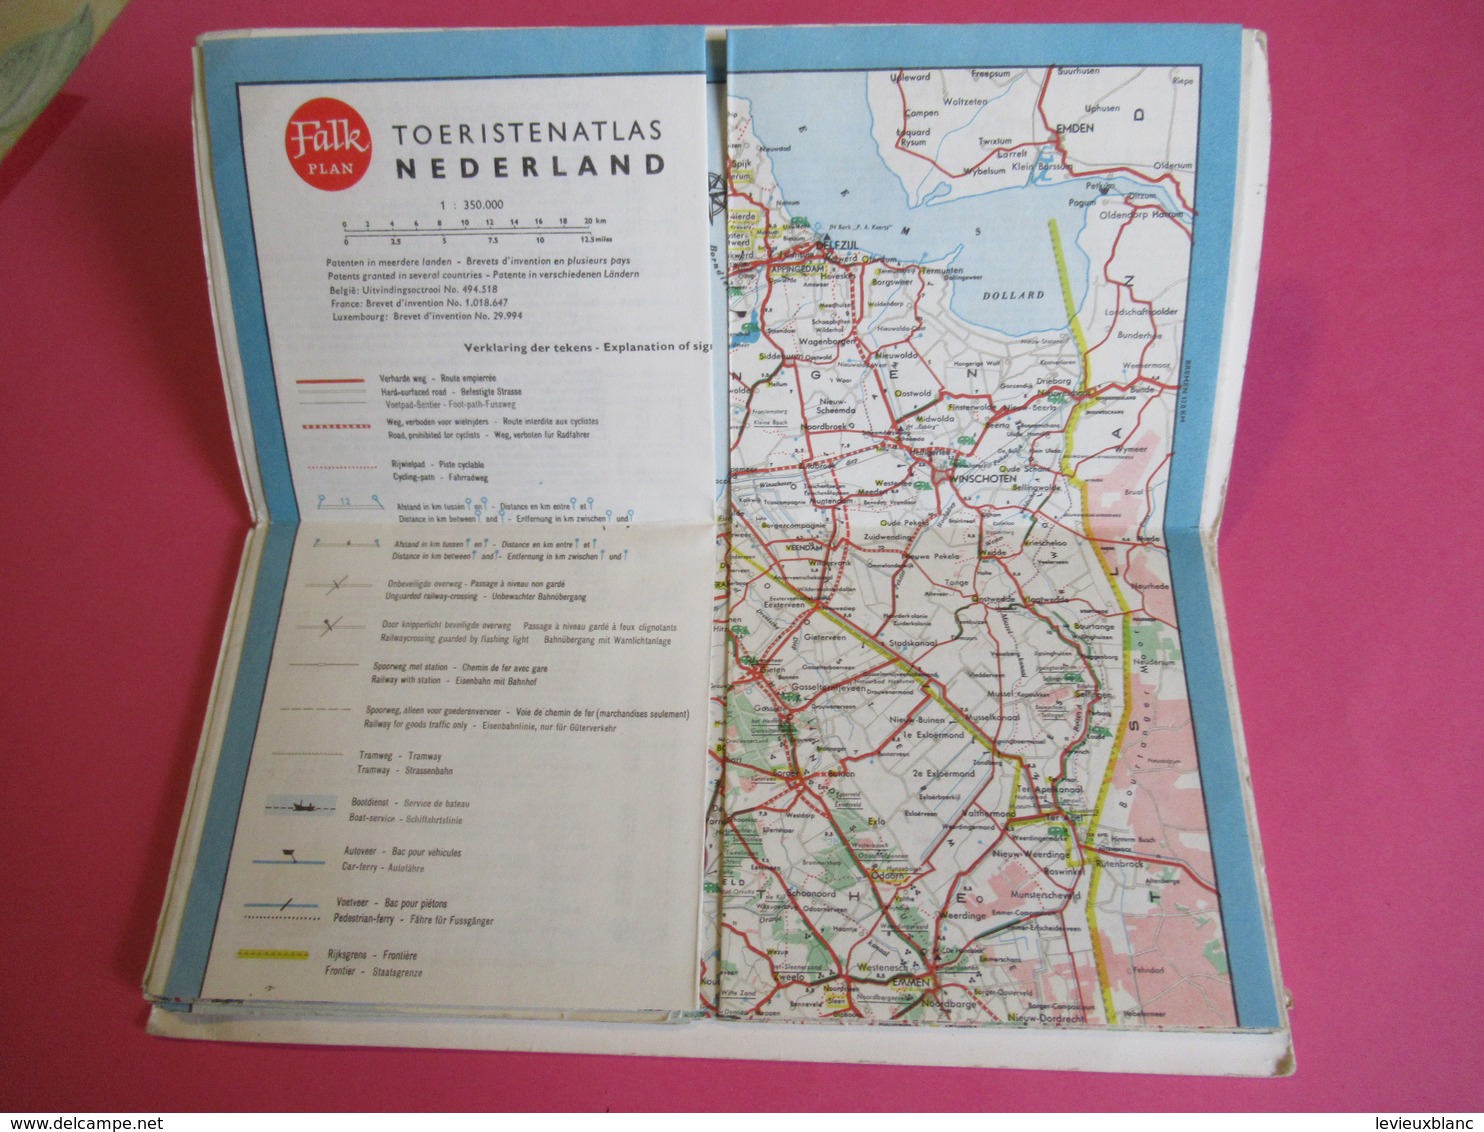 Toeristenatlas Van NEDERLAND / Falk Plan/ Cartografisch Instituut Bootsma/La Hague/HOLLANDE/ Vers 1960   PGC279 - Cartes Routières